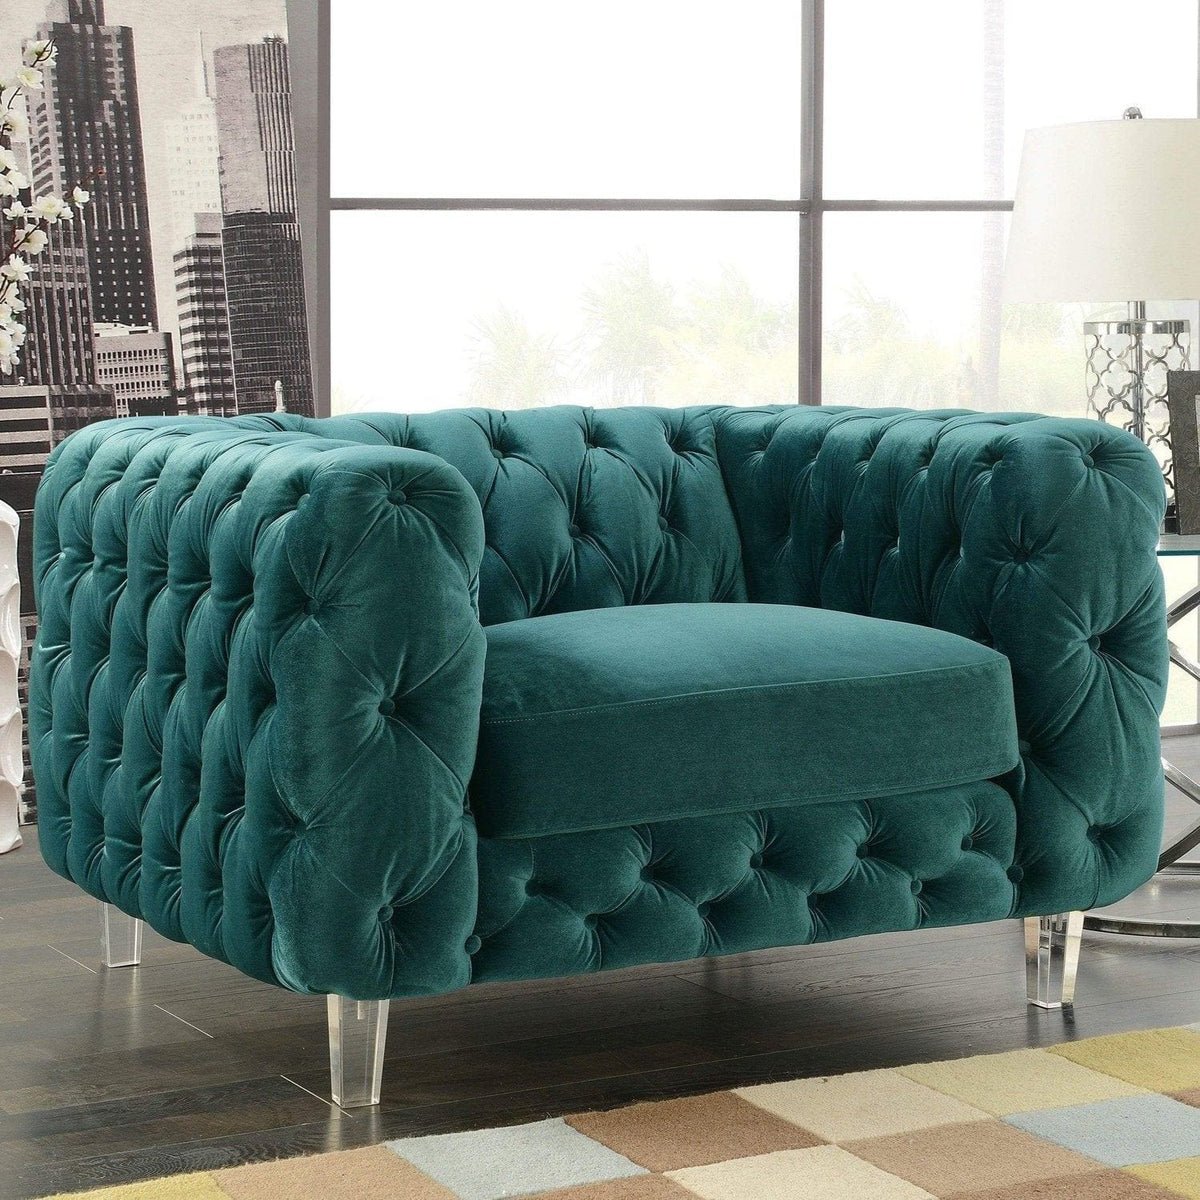 Iconic Home Syracus Plush Tufted Velvet Club Chair Green